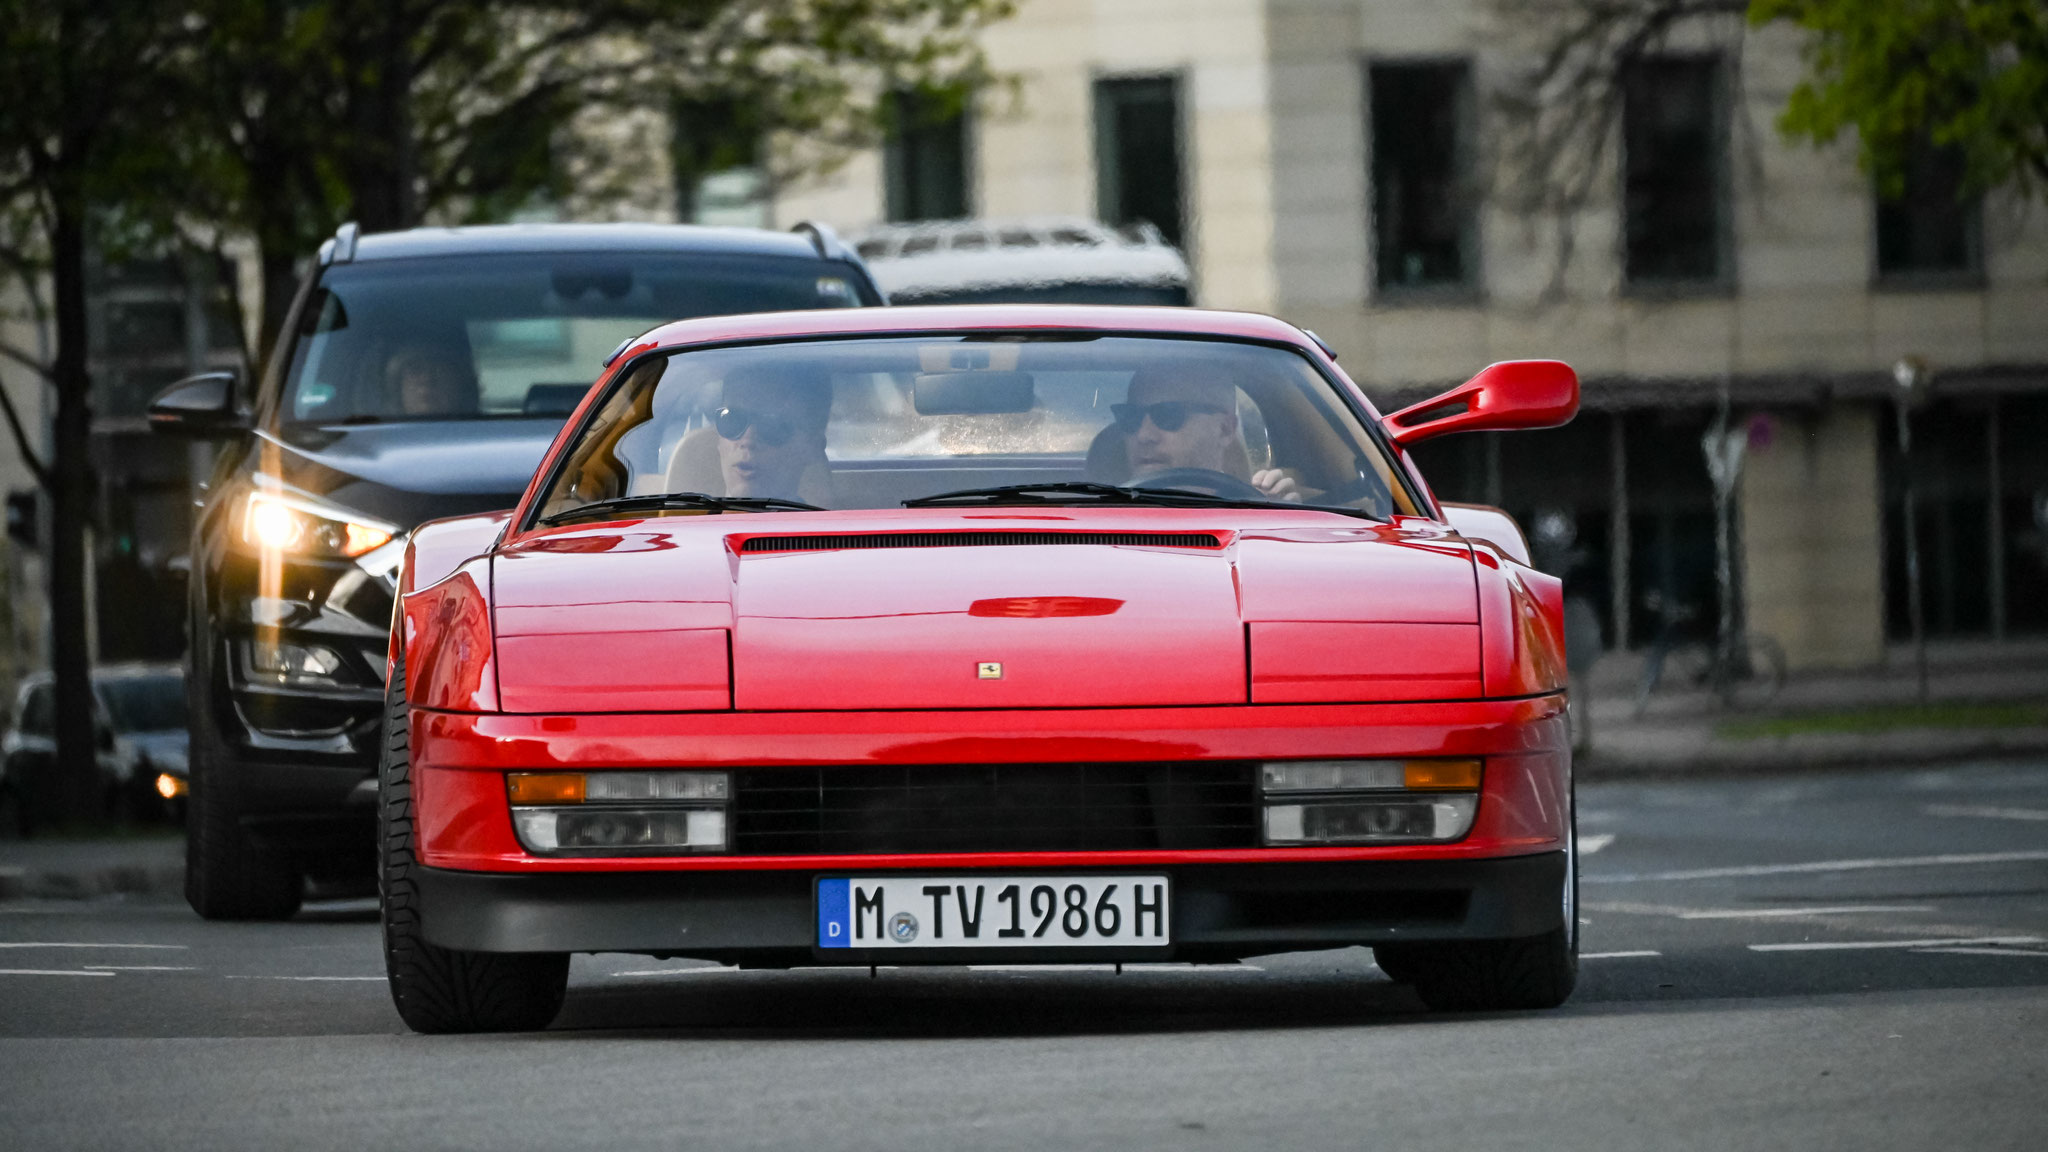 Ferrari testarossa - M-TV1986H